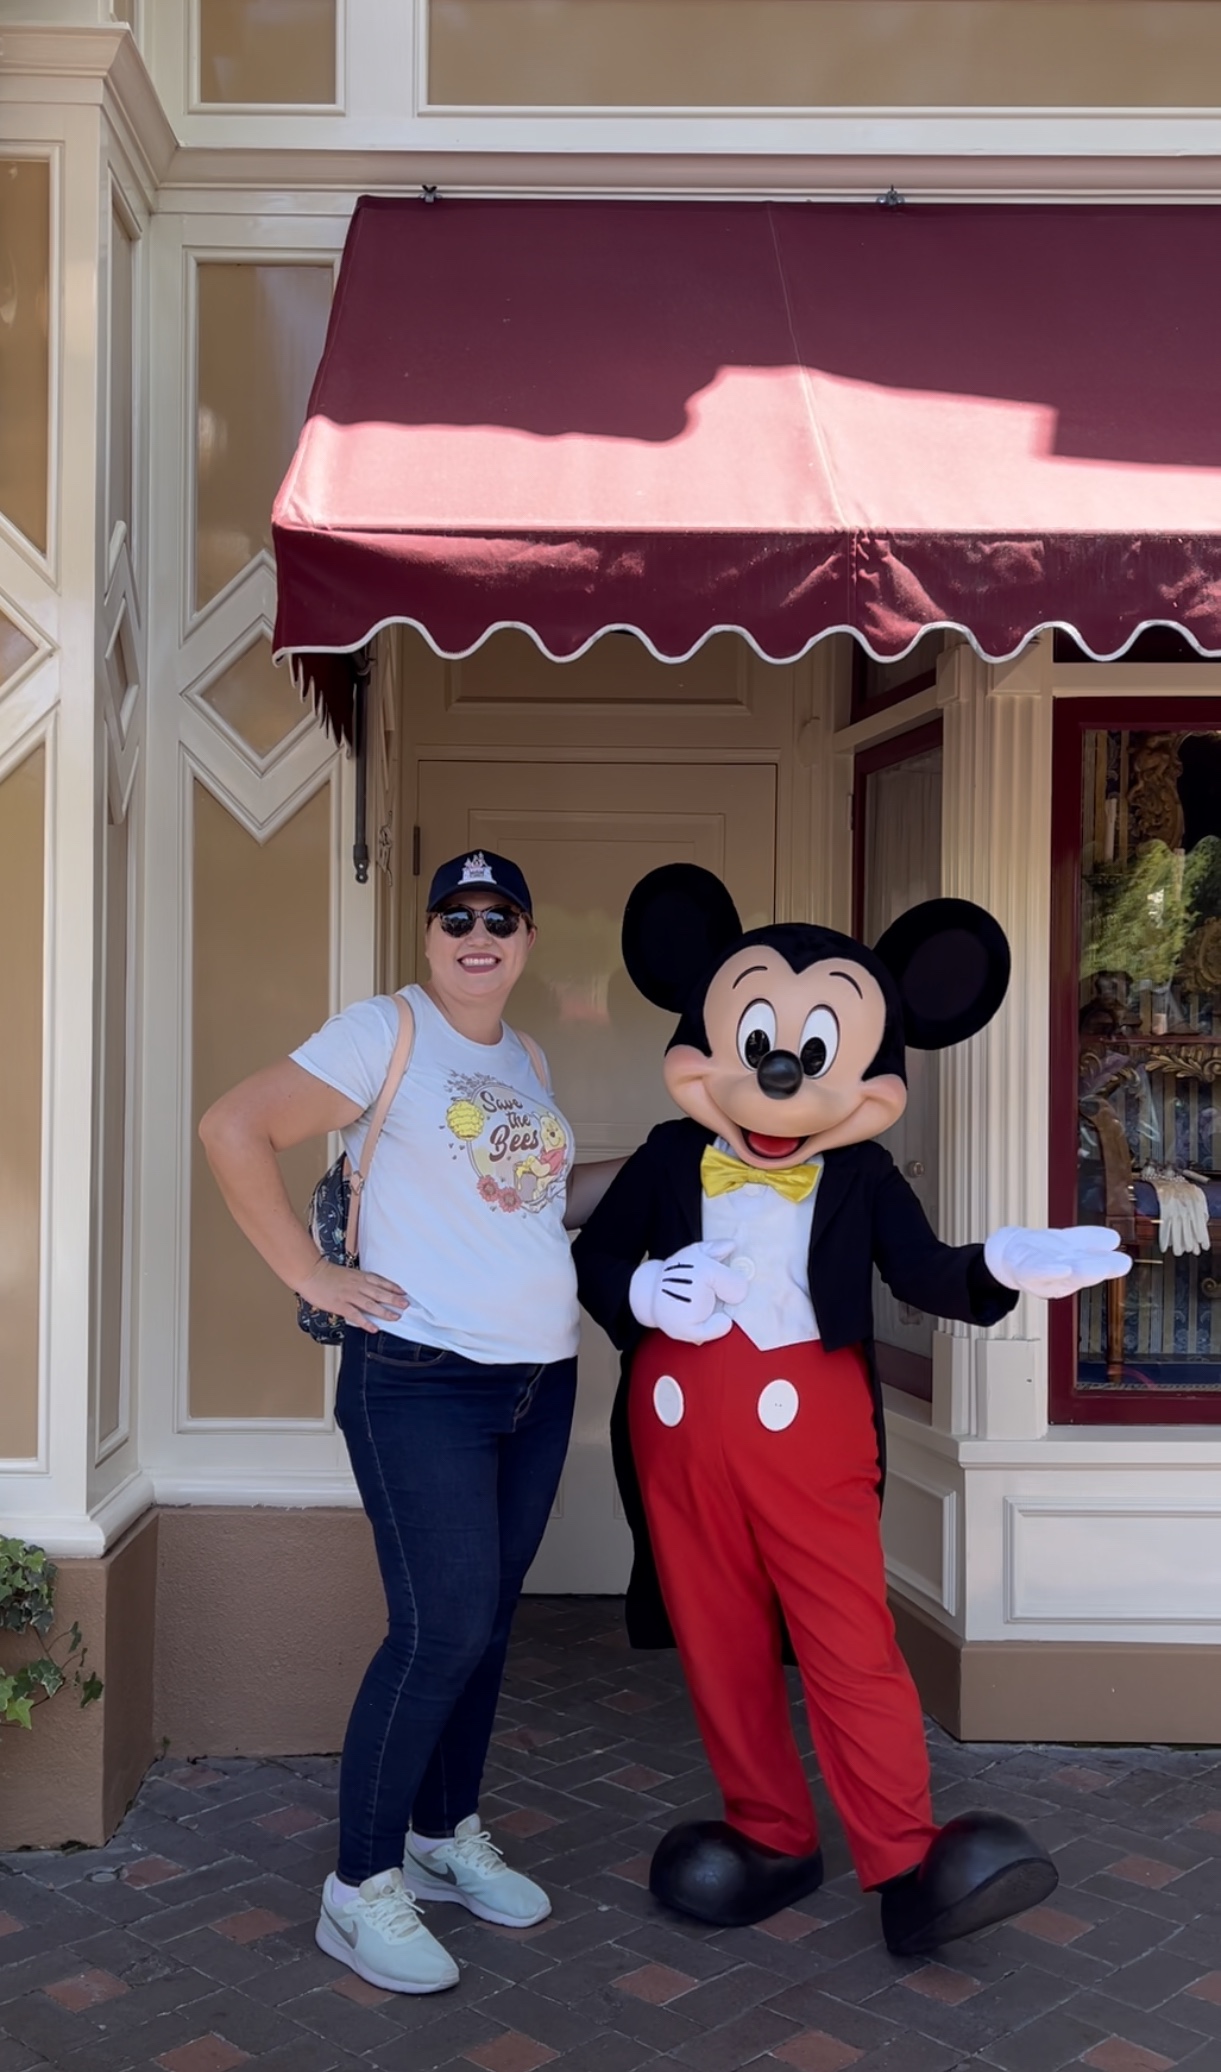 Disney Characters Hugs are Back at the Disneyland Resort! post thumbnail image